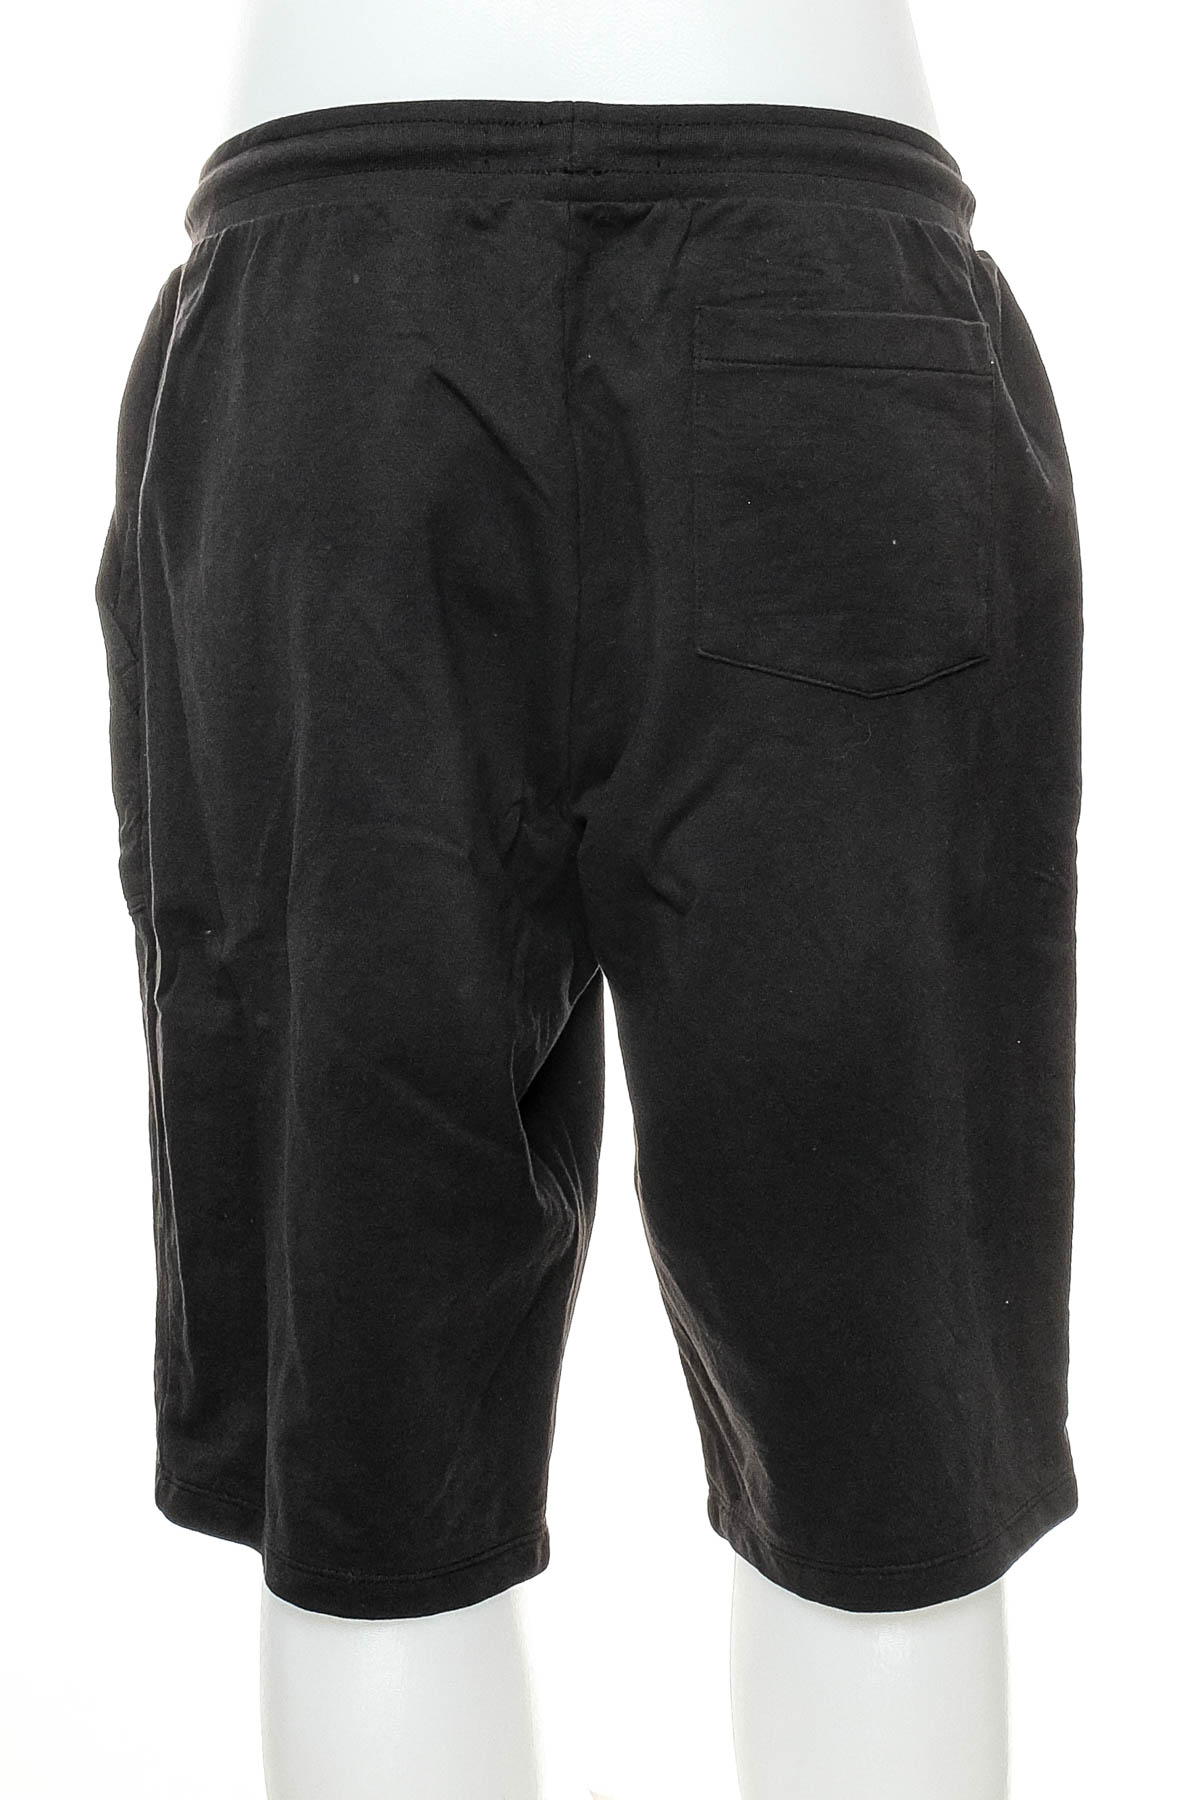 Female shorts - Bpc Bonprix Collection - 1